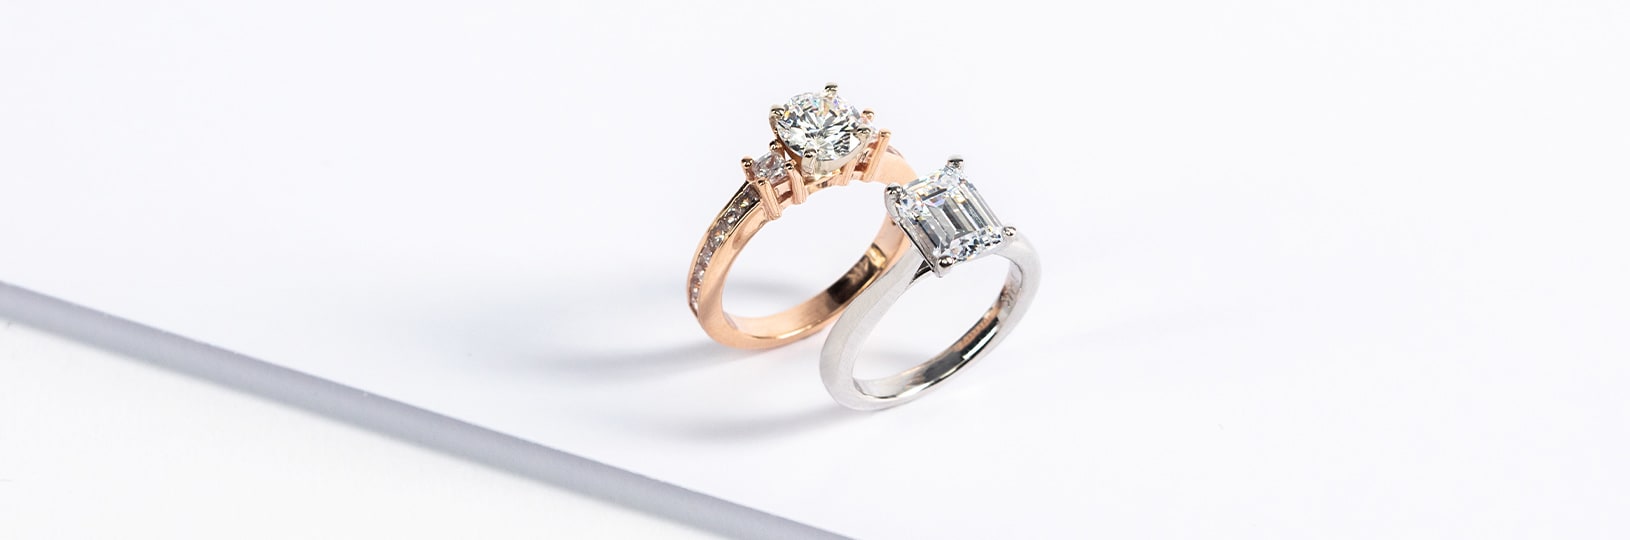 High set engagement rings.